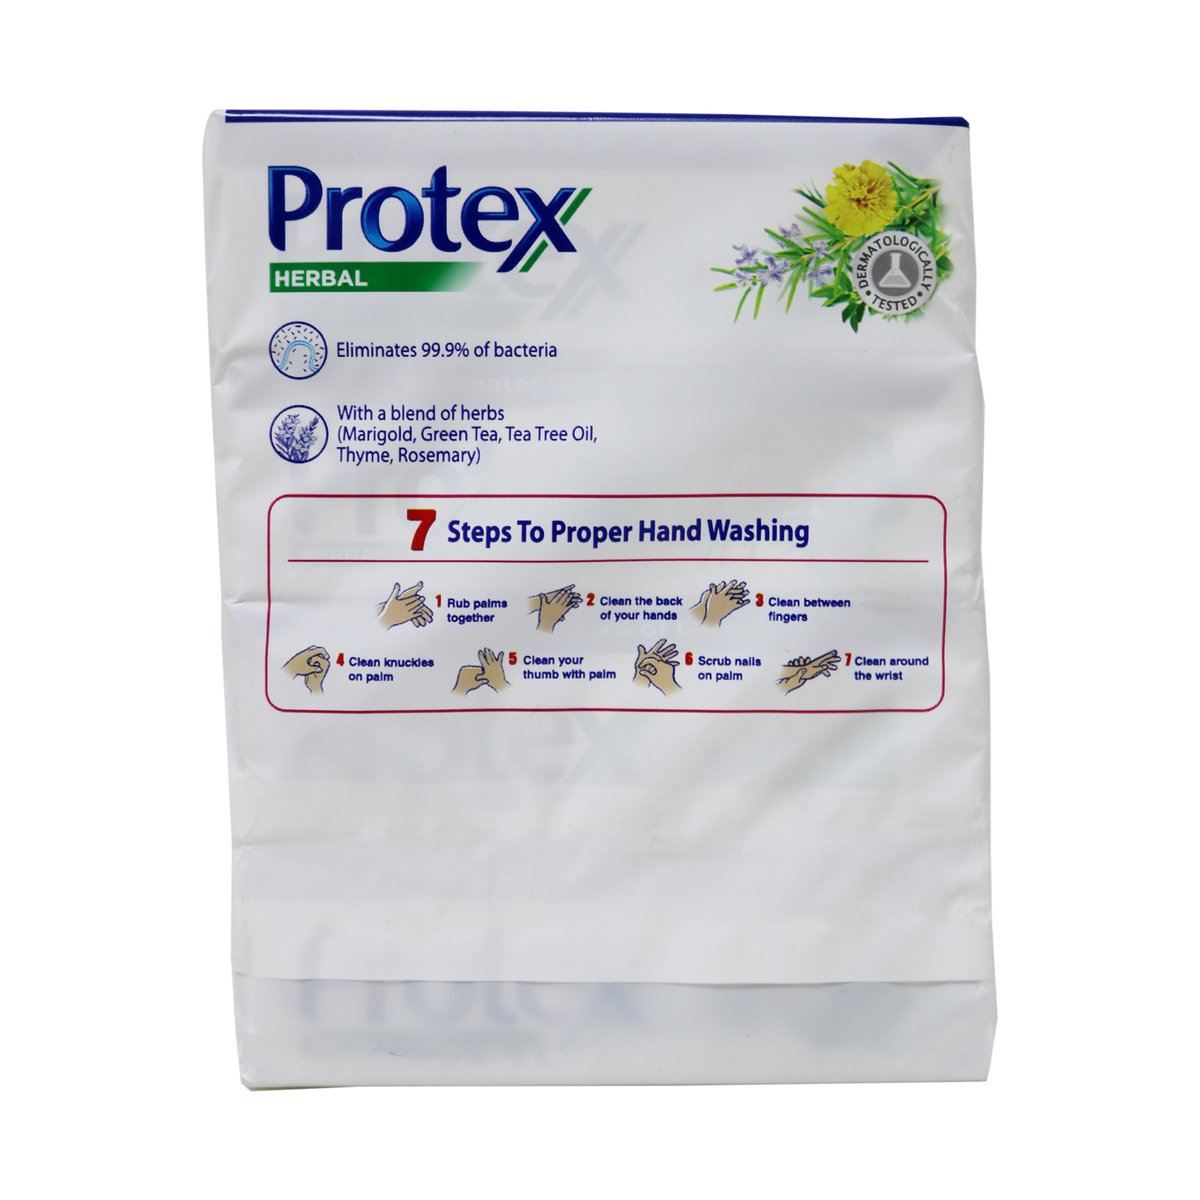 Protex Bath Soap Herbal Buy 3 Free1 75g